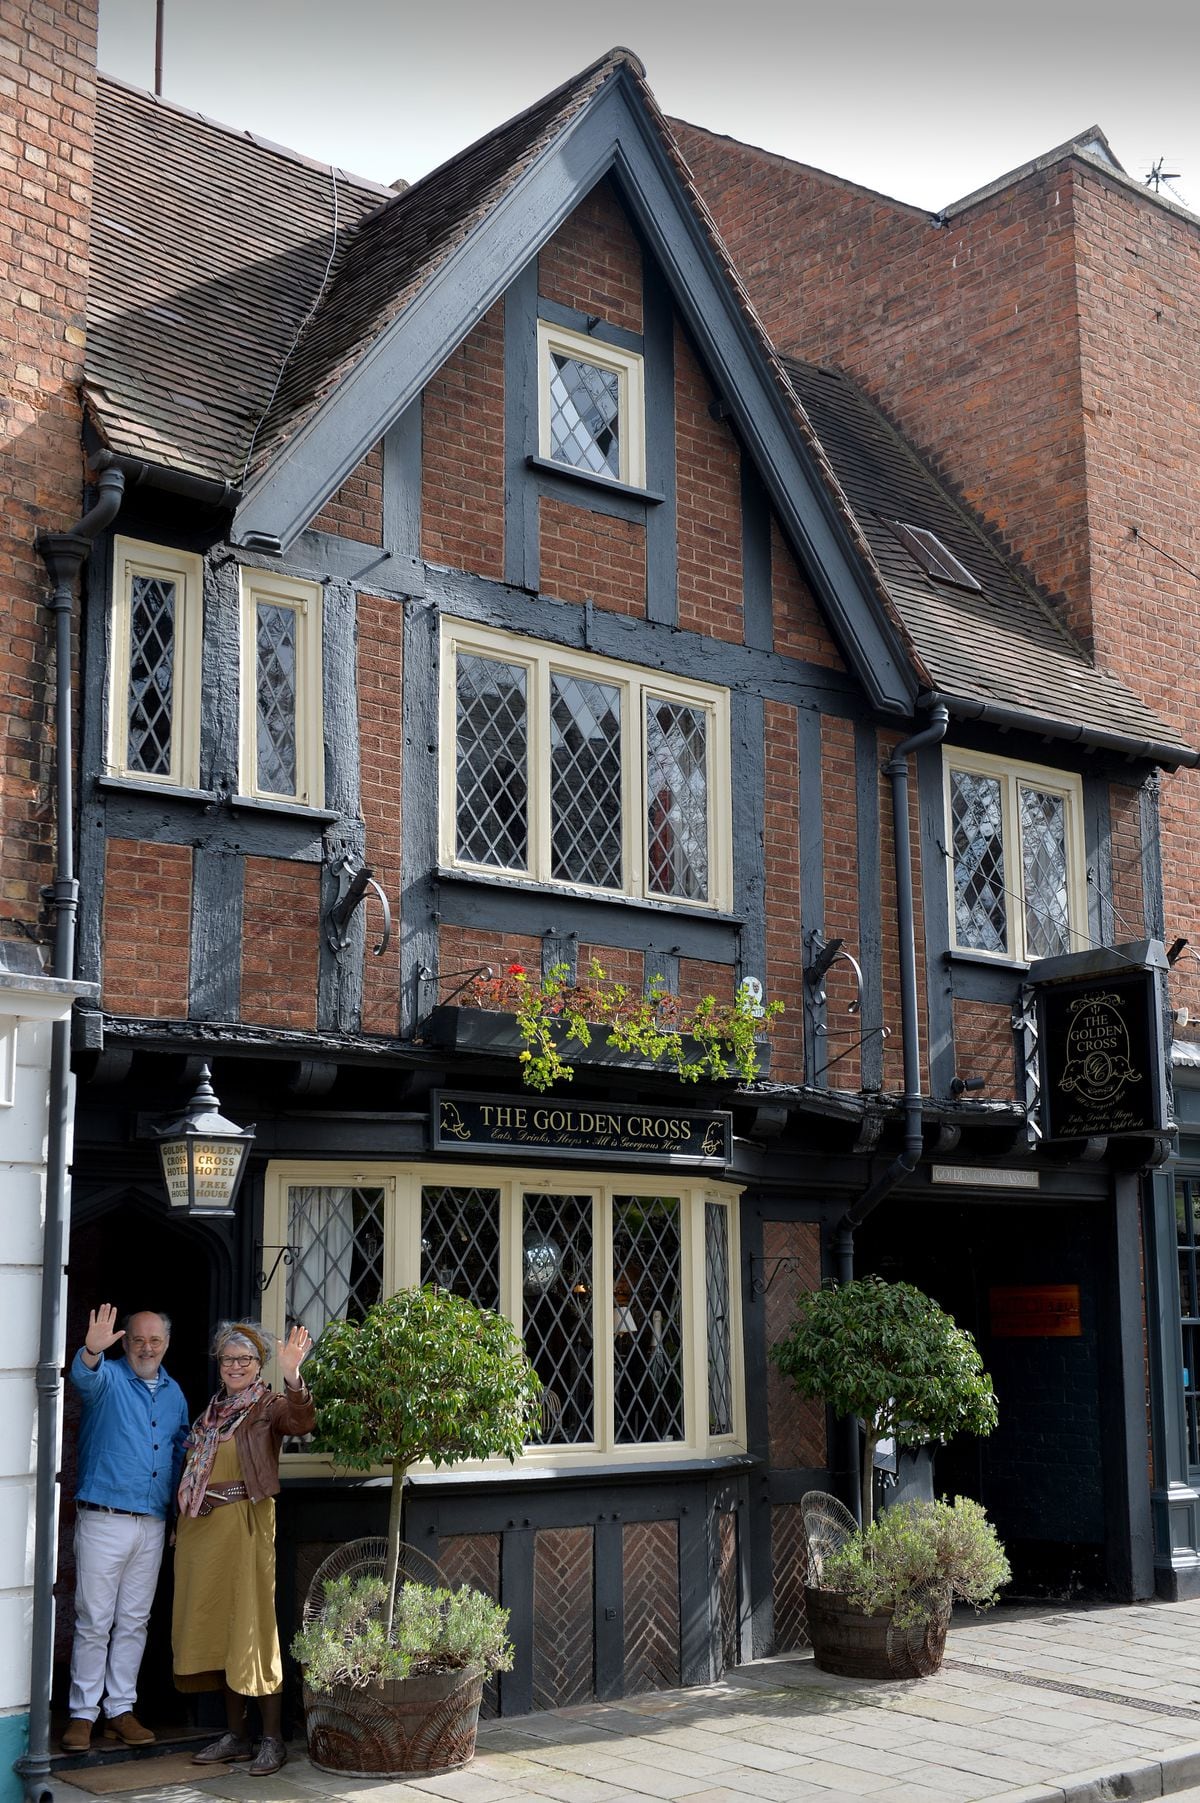 The Golden Cross Pub, Shrewsbury.